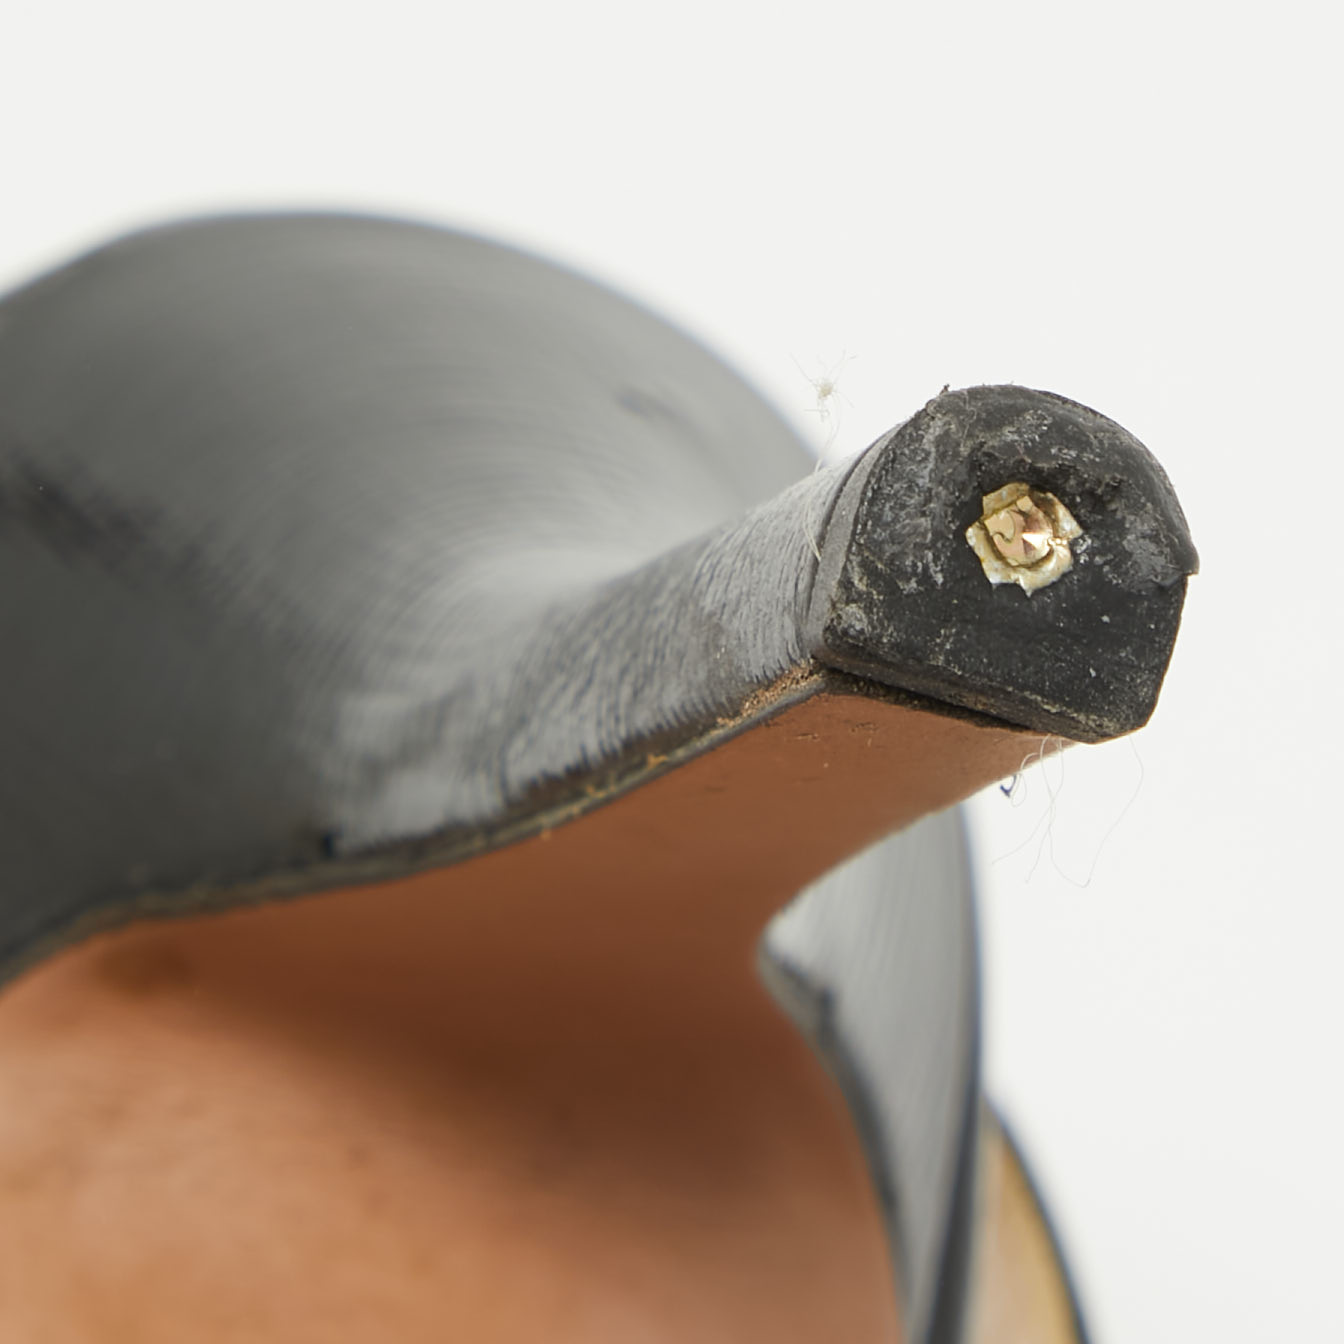 Prada Black Saffiano Patent Leather Bow Slingback Sandals Size 35.5